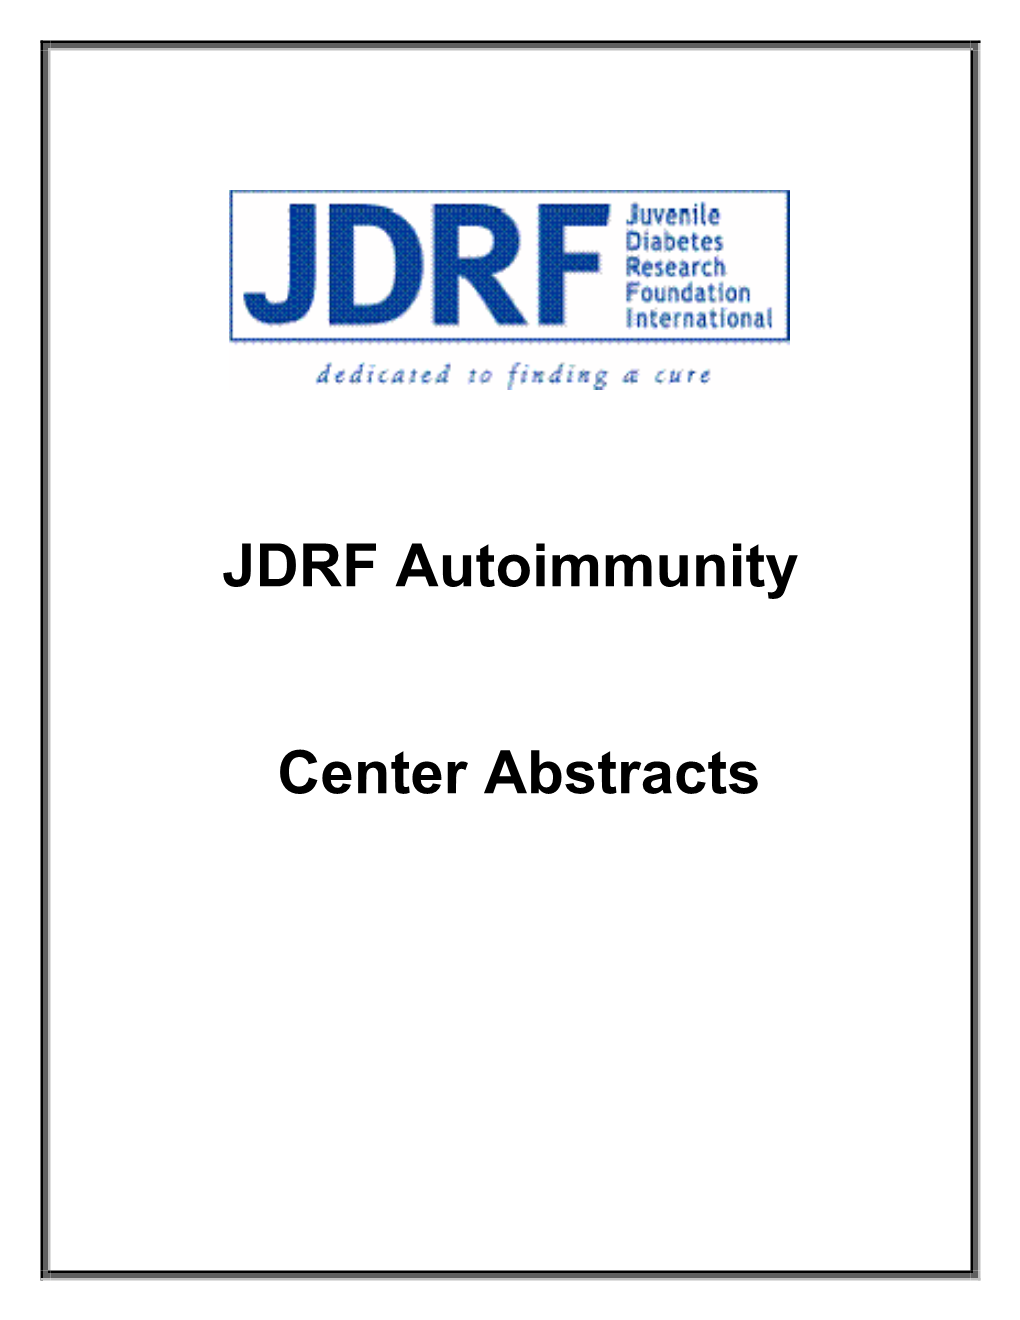 JDRF Autoimmunity Center Abstracts